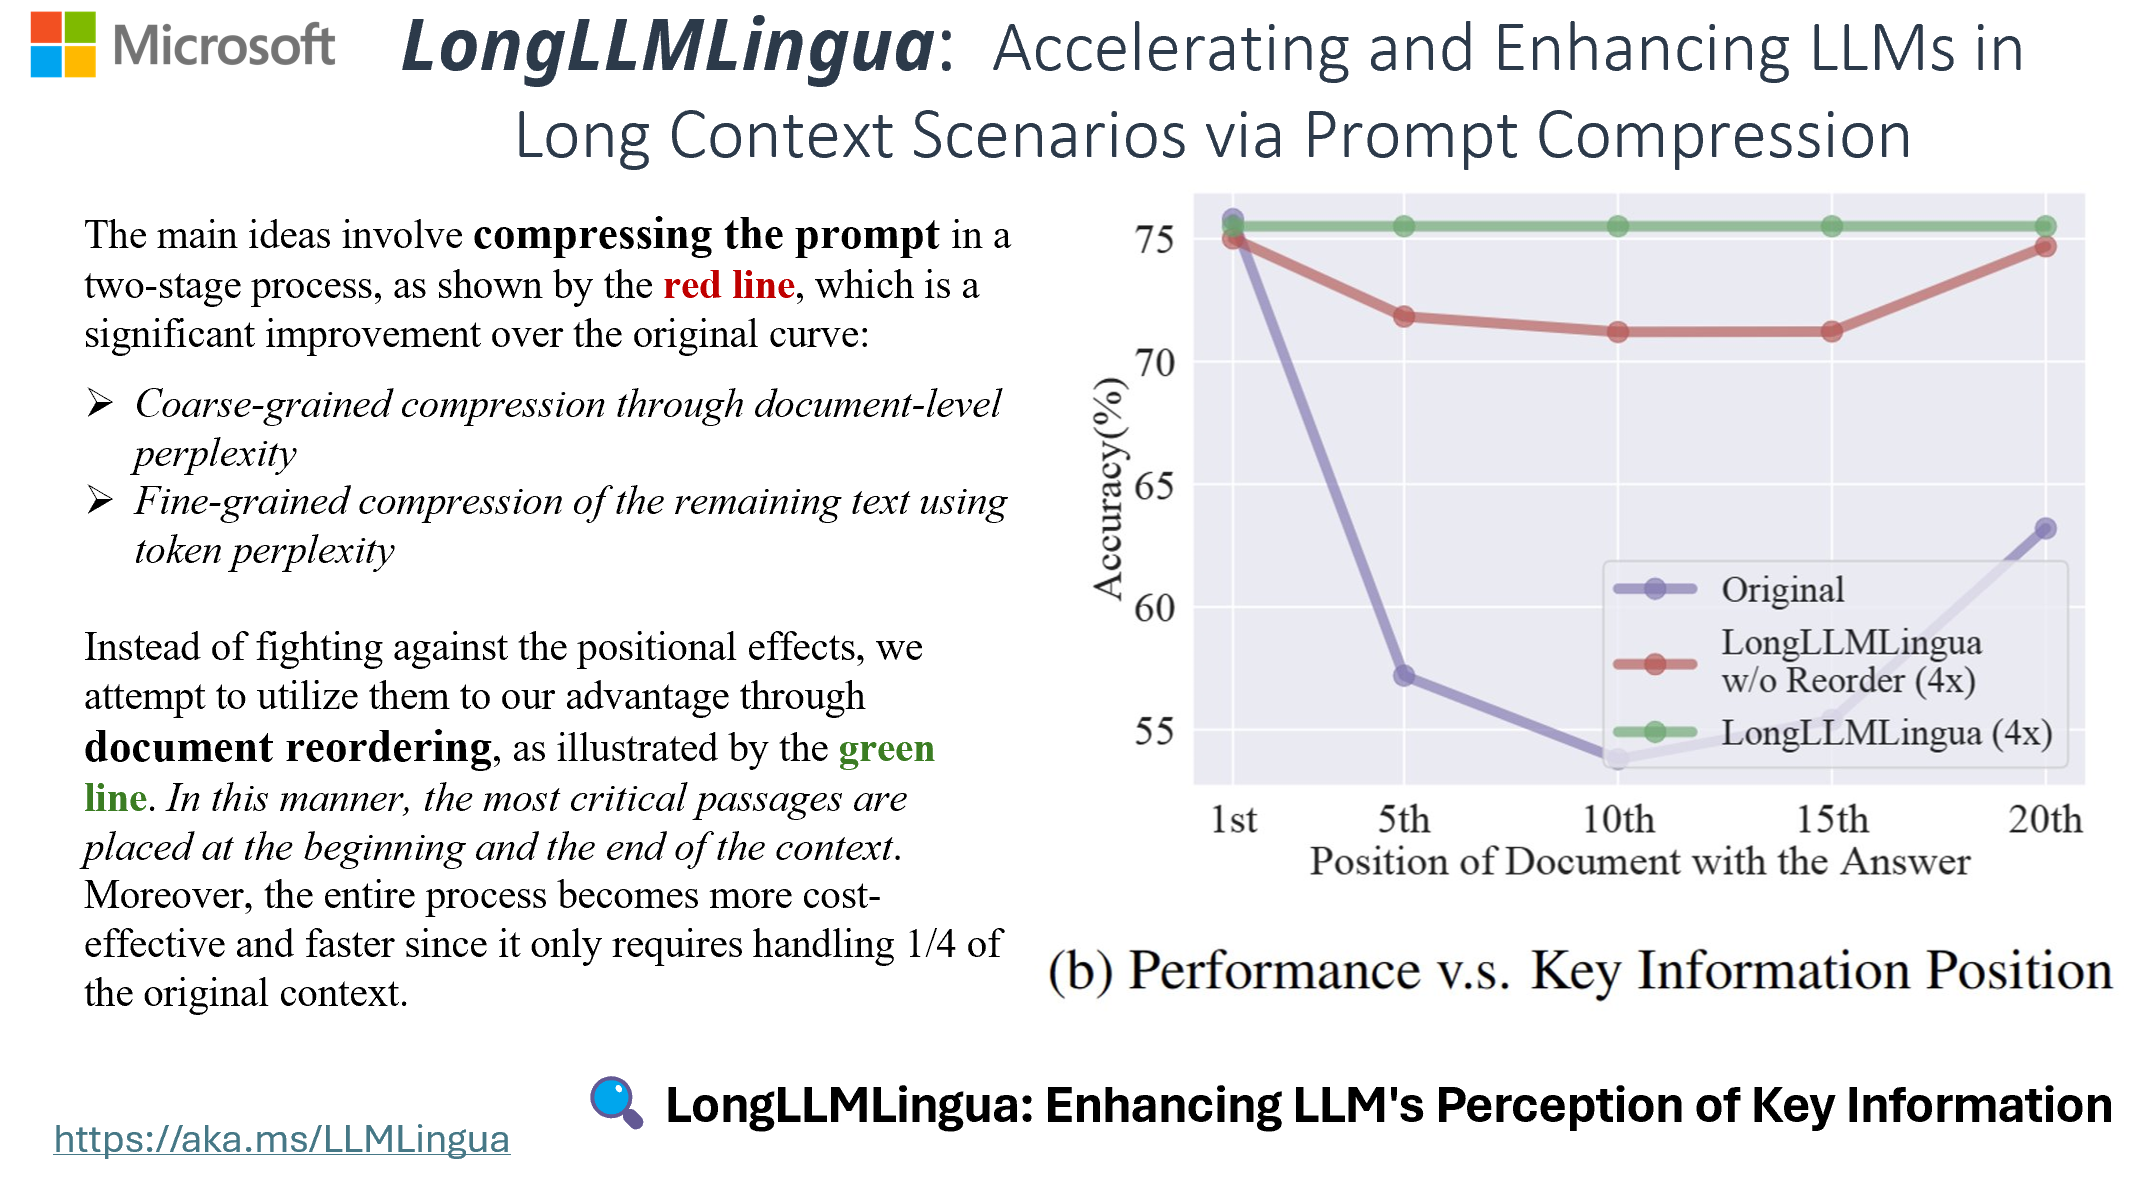 Framework of LongLLMLingua